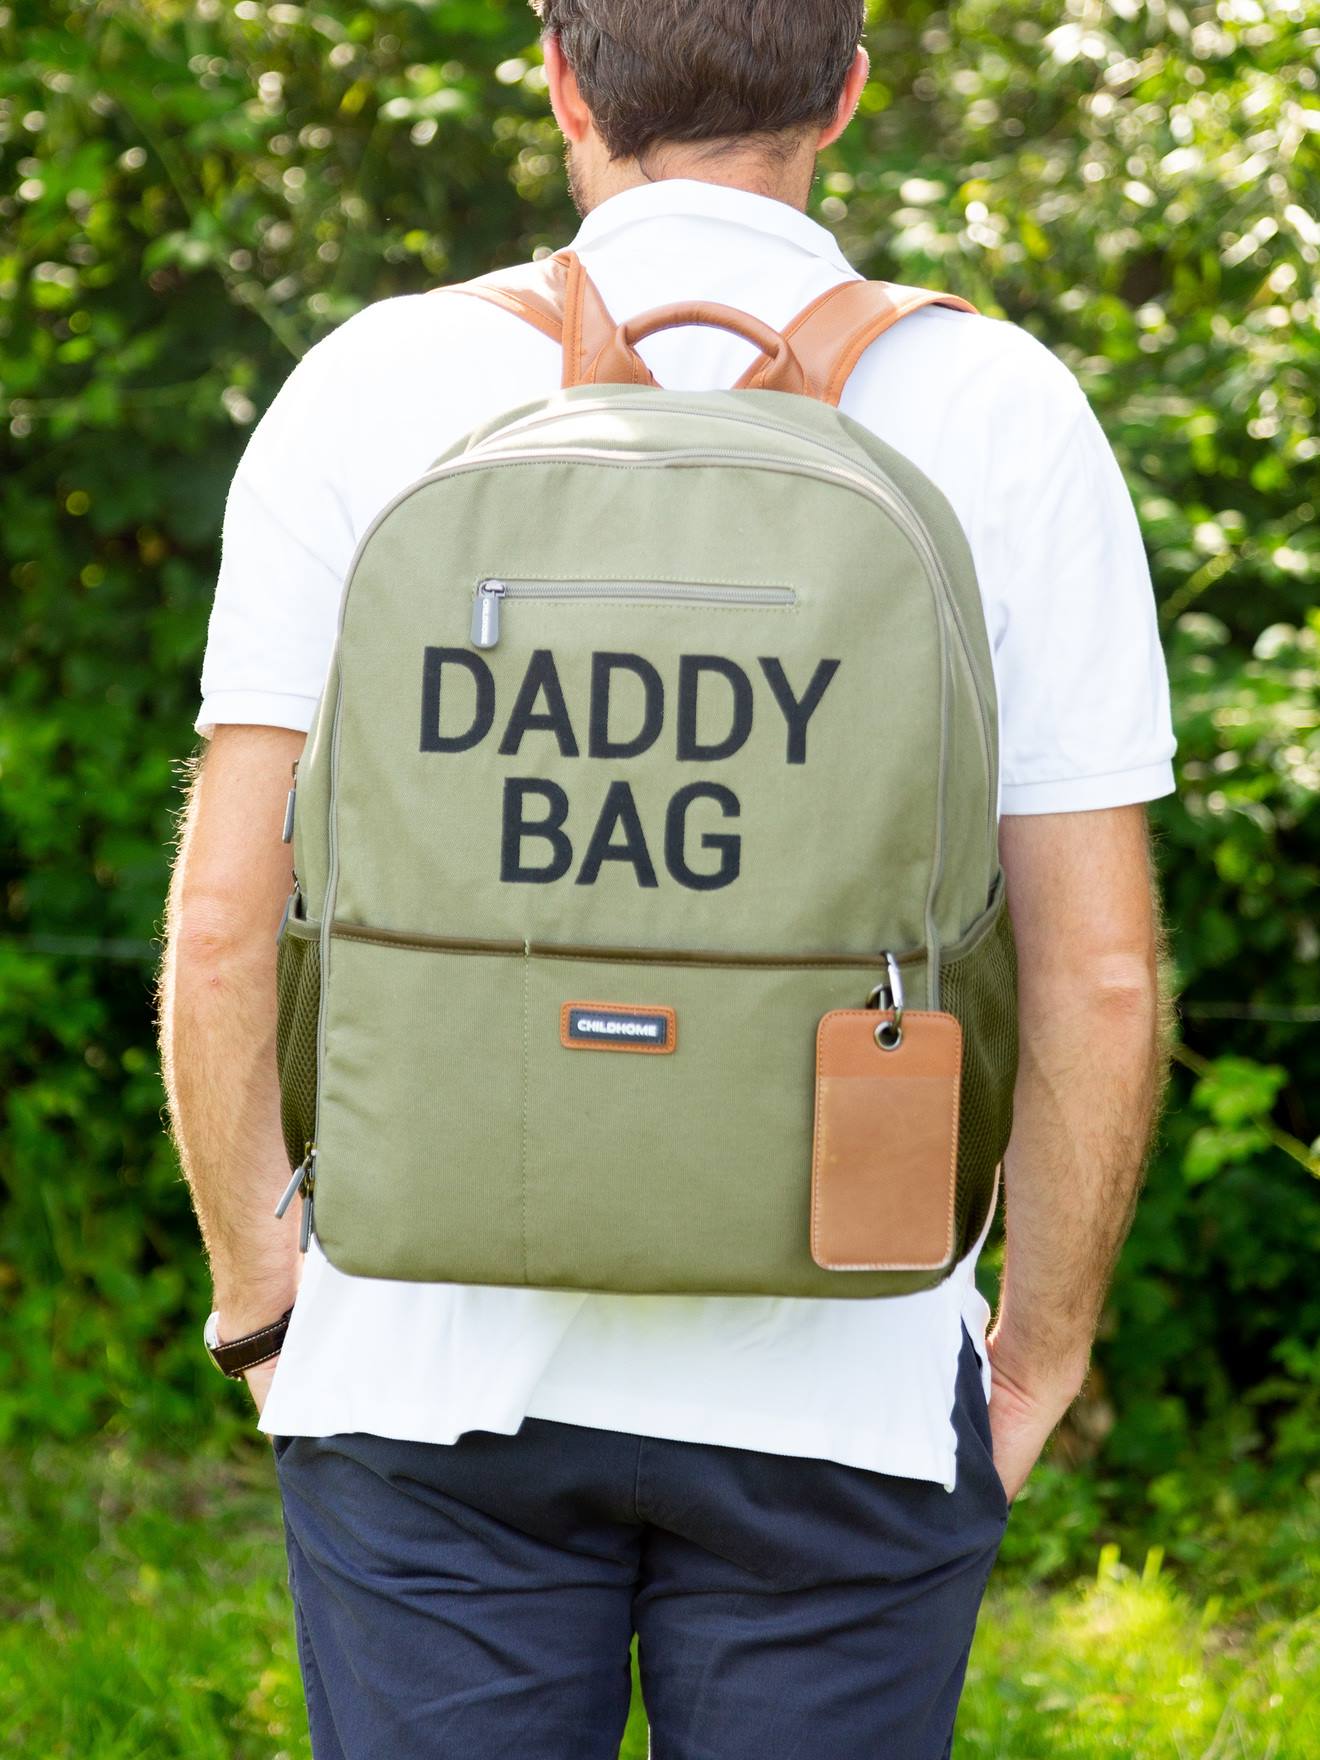 Sac à dos à langer Daddy Bag CHILDHOME - kaki, Puériculture